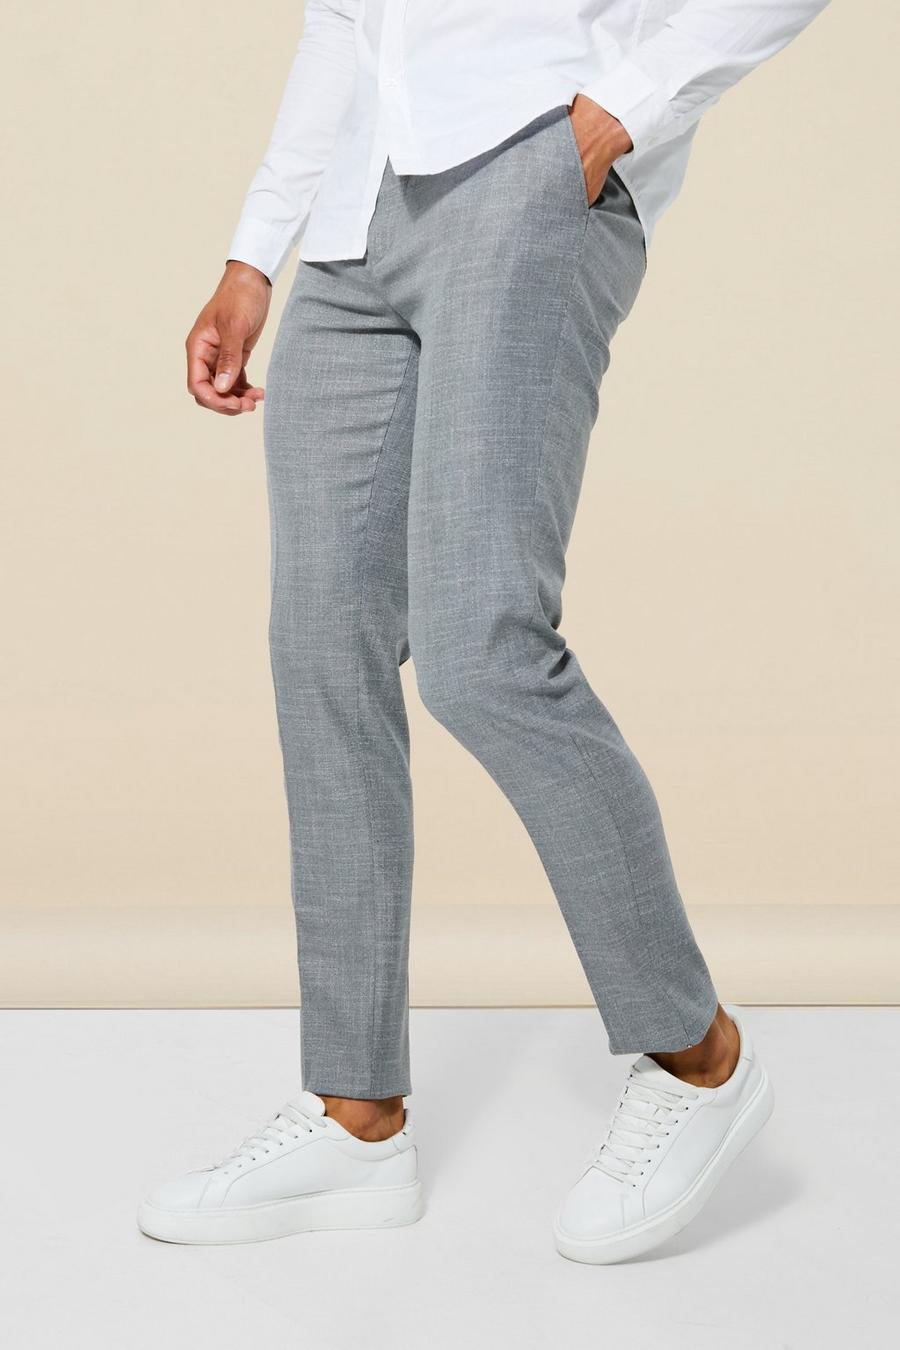 Pantaloni completo Tall Slim Fit, Grey grigio